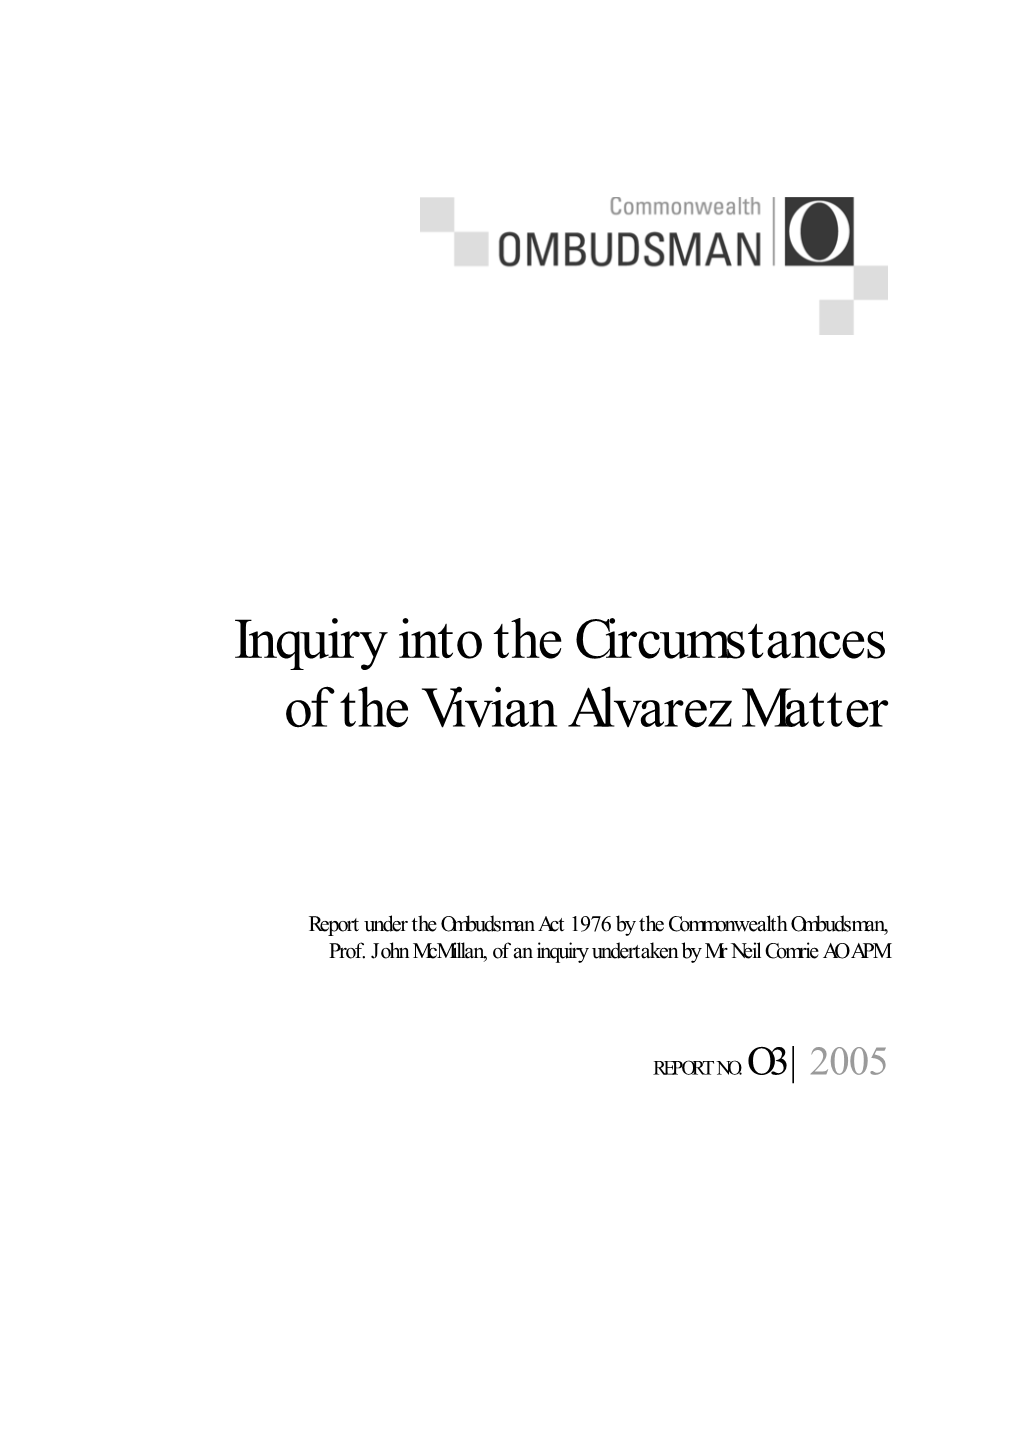 Inquiry Into the Circumstances of the Vivian Alvarez Matter